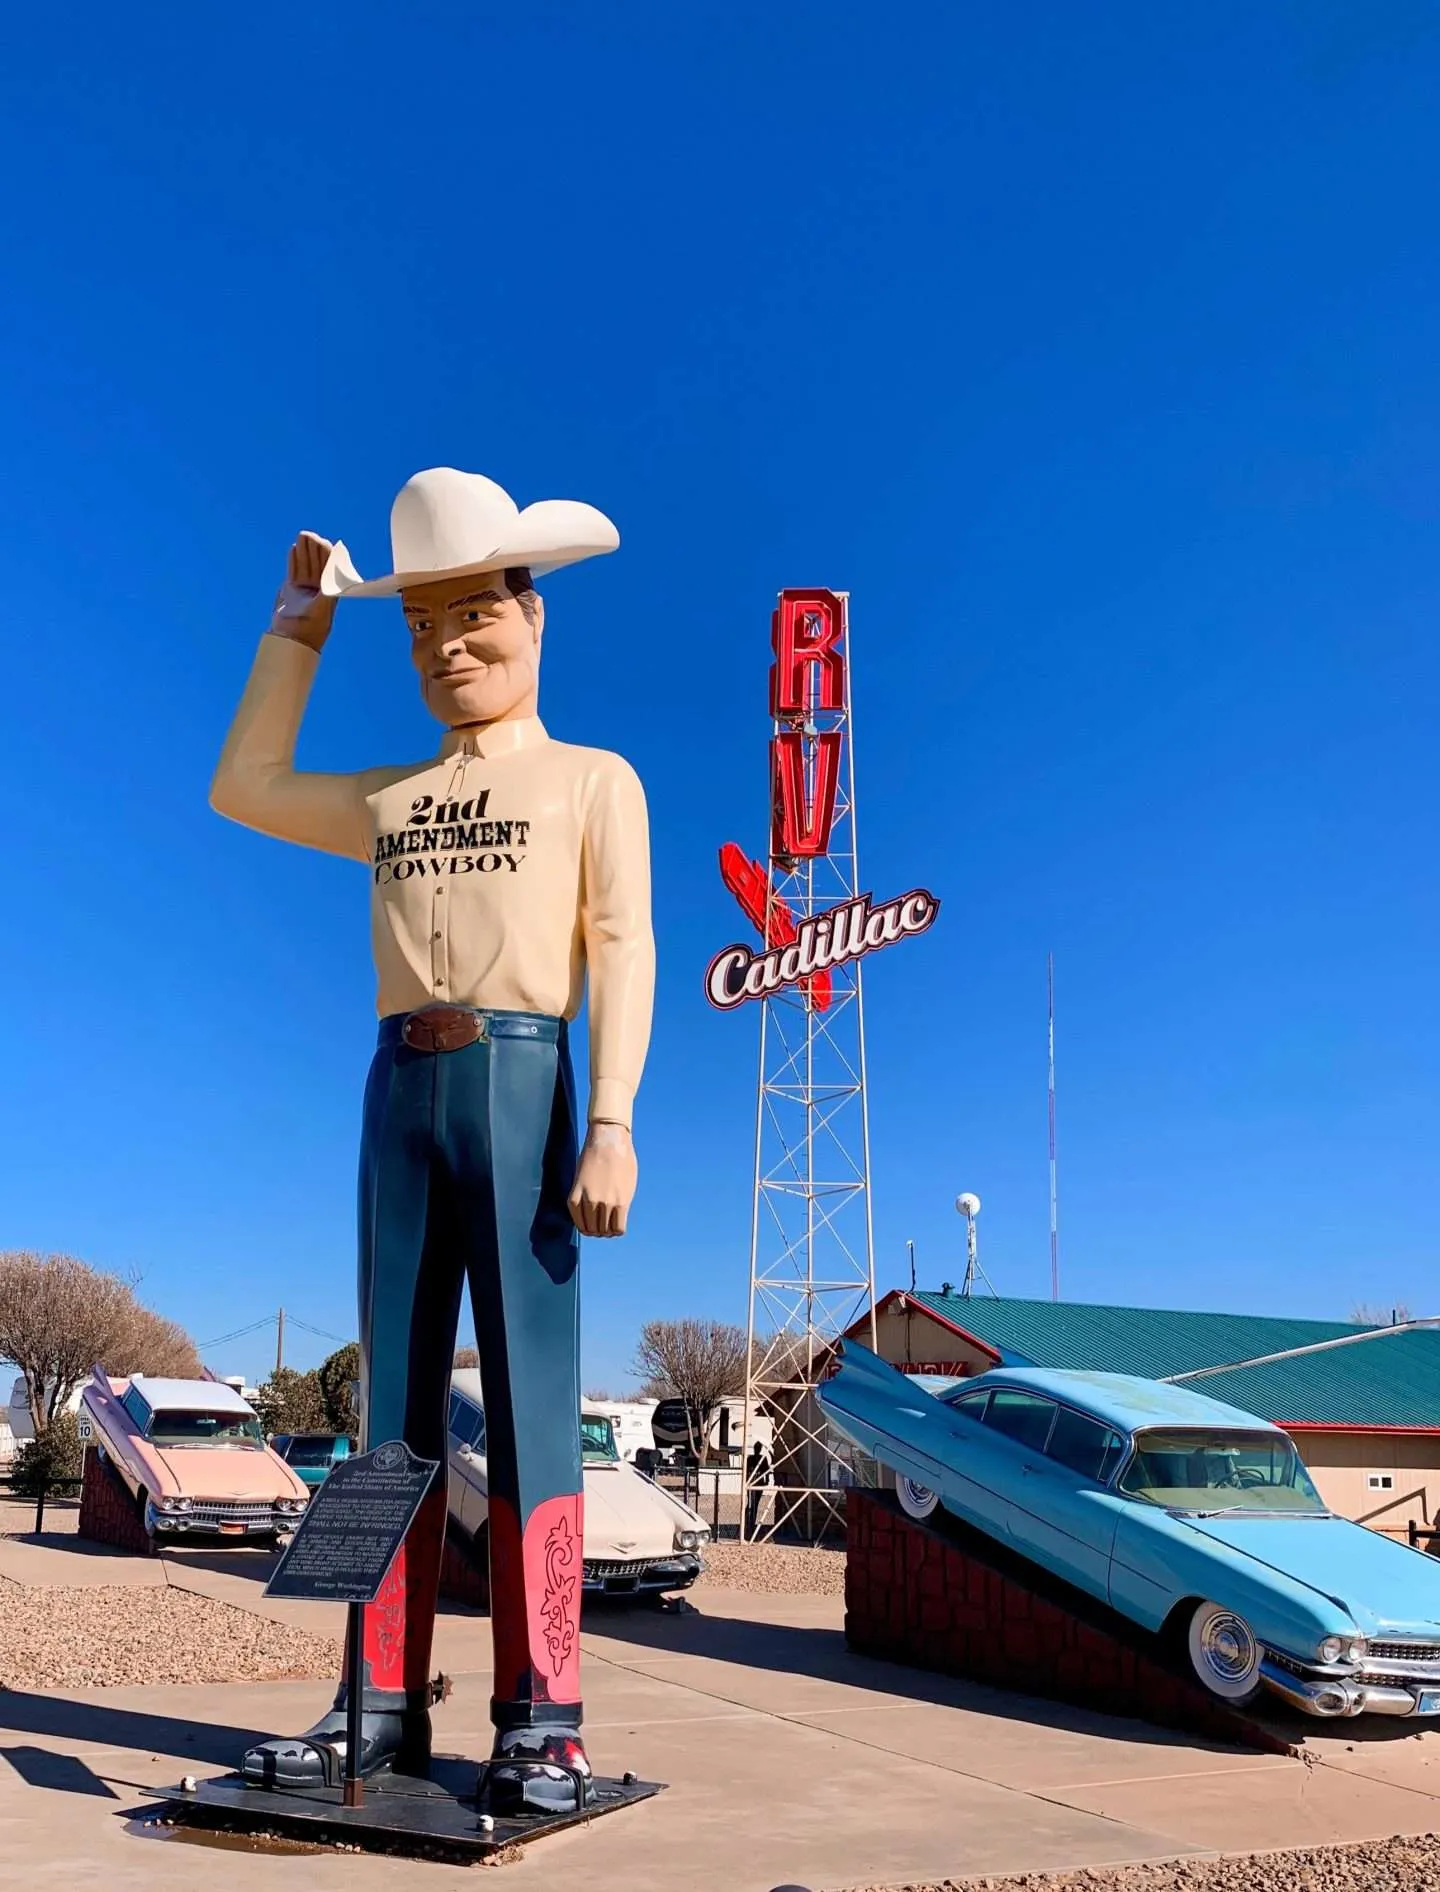 The 2nd Amendment Cowboy standing tall near Cadillac Ranch in Amarillo, Texas.